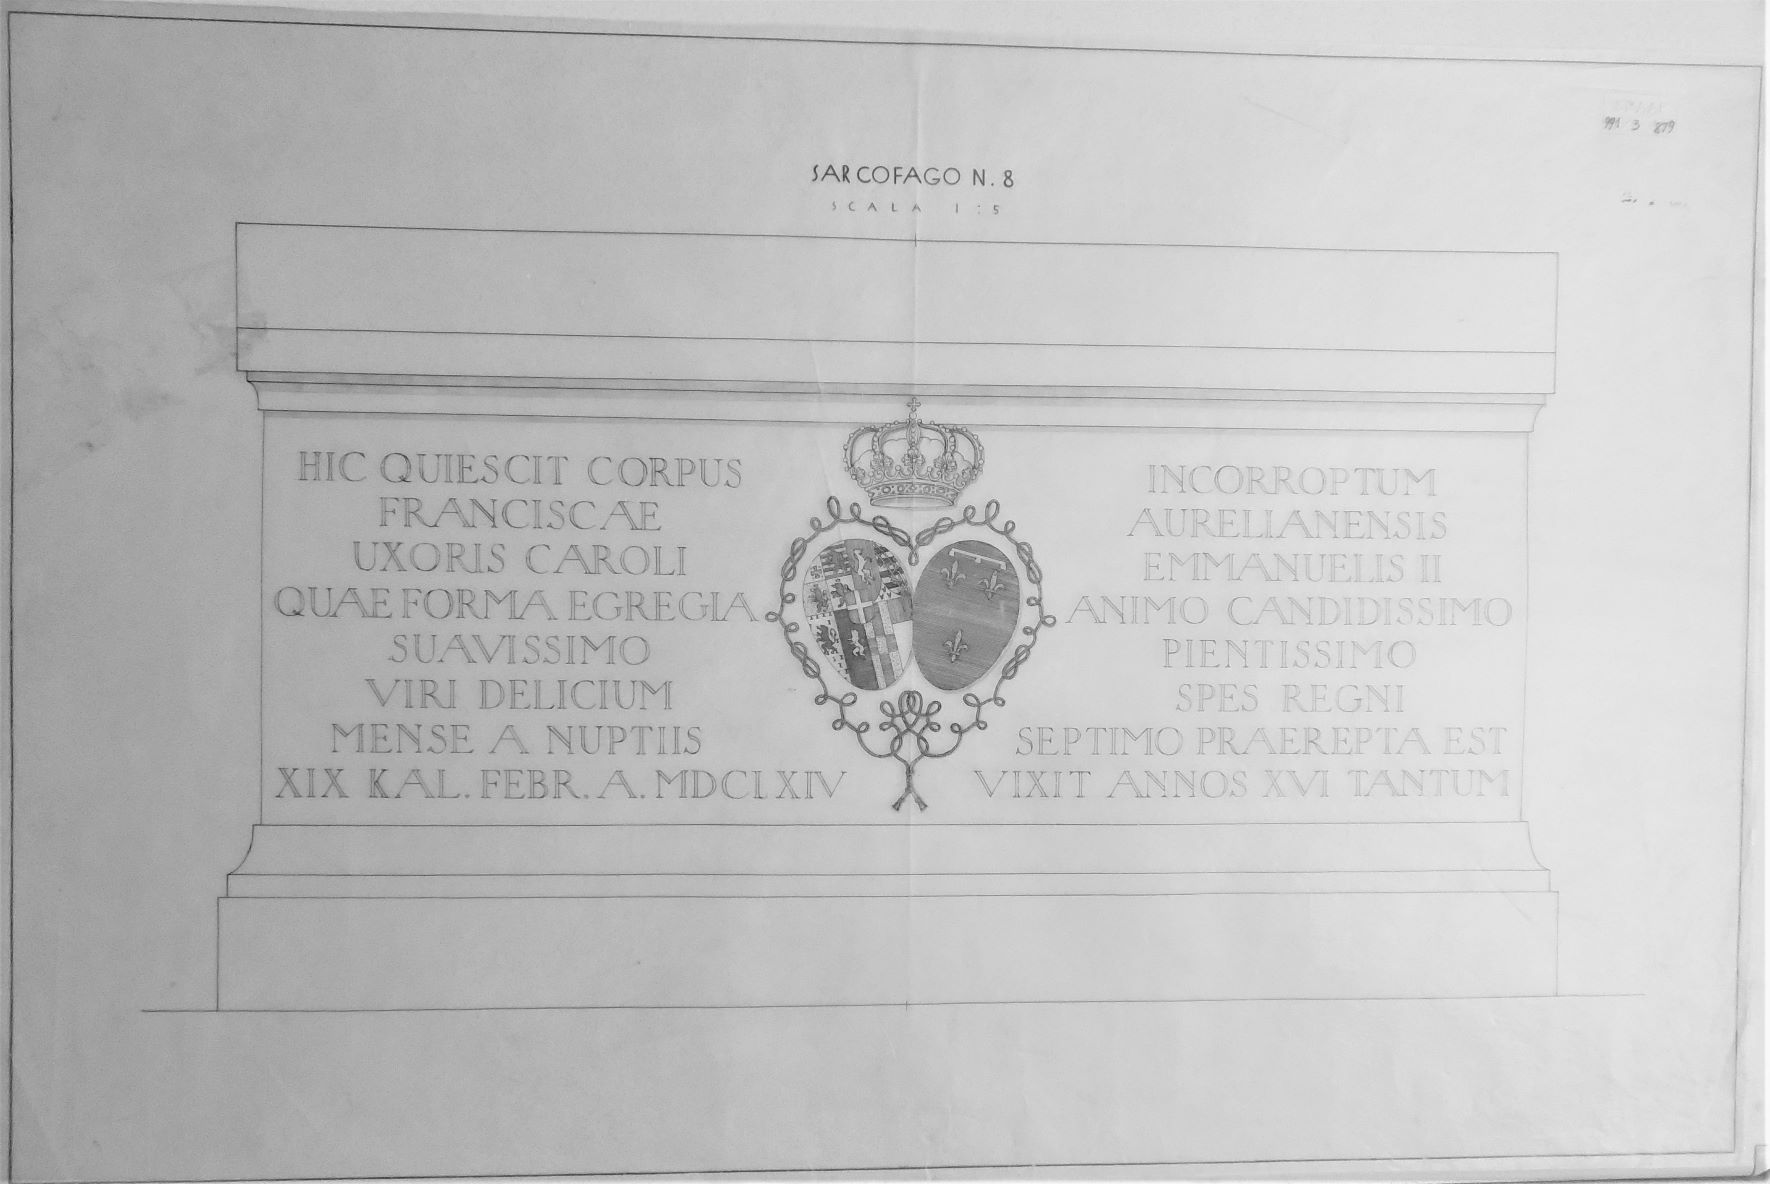 Sacra di San Michele/ Sarcofago n. 8 - scala 1:5, Sacra di San Michele a Sant'Ambrogio di Susa (TO) - Sarcofago n. 8 - scala 1:5 (disegno) di Chierici Umberto (cerchia) (secondo quarto sec. XX)